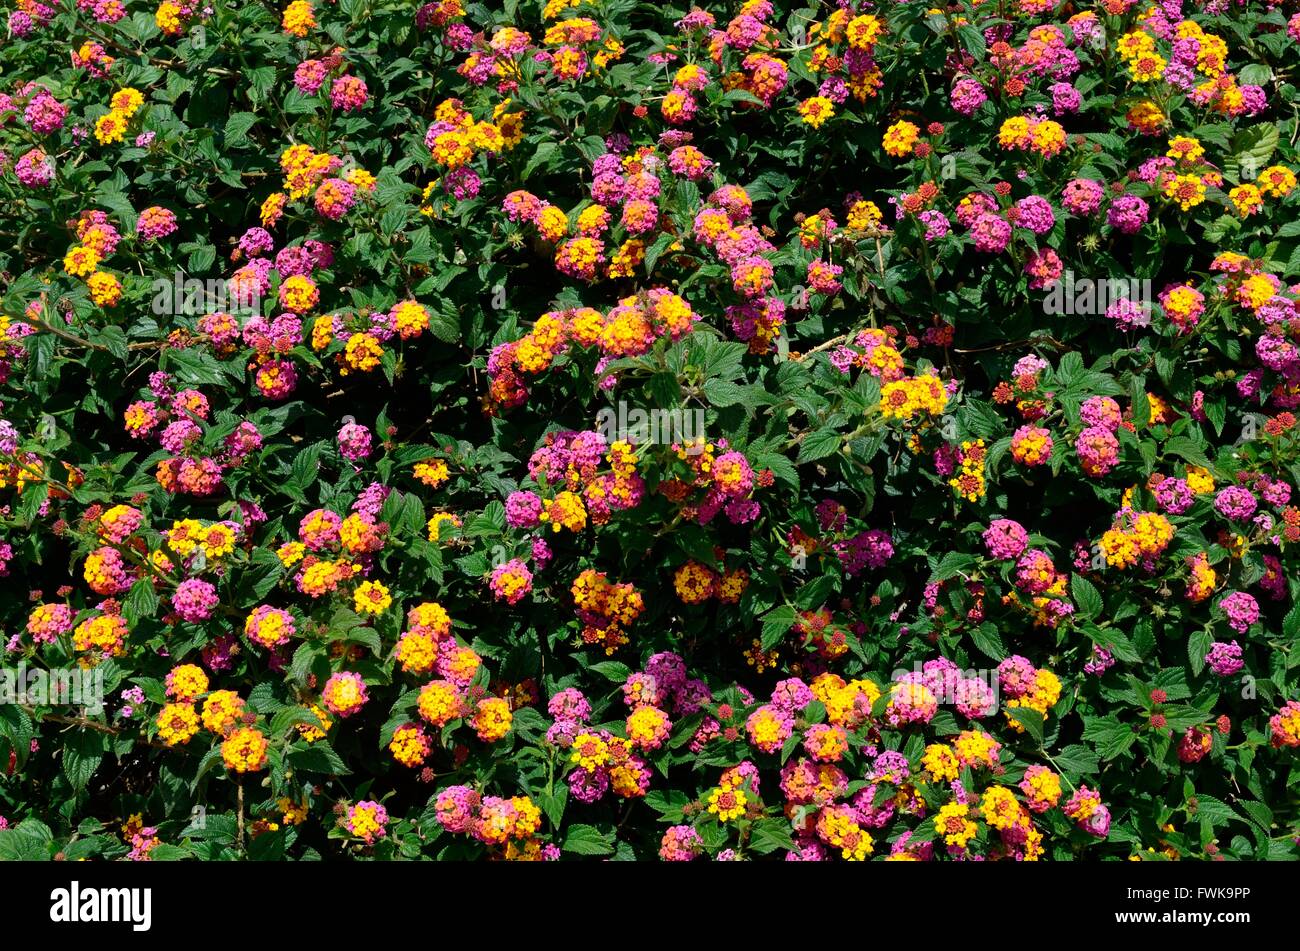 Lantana camara spanish flag flowers hi-res stock photography and images -  Alamy